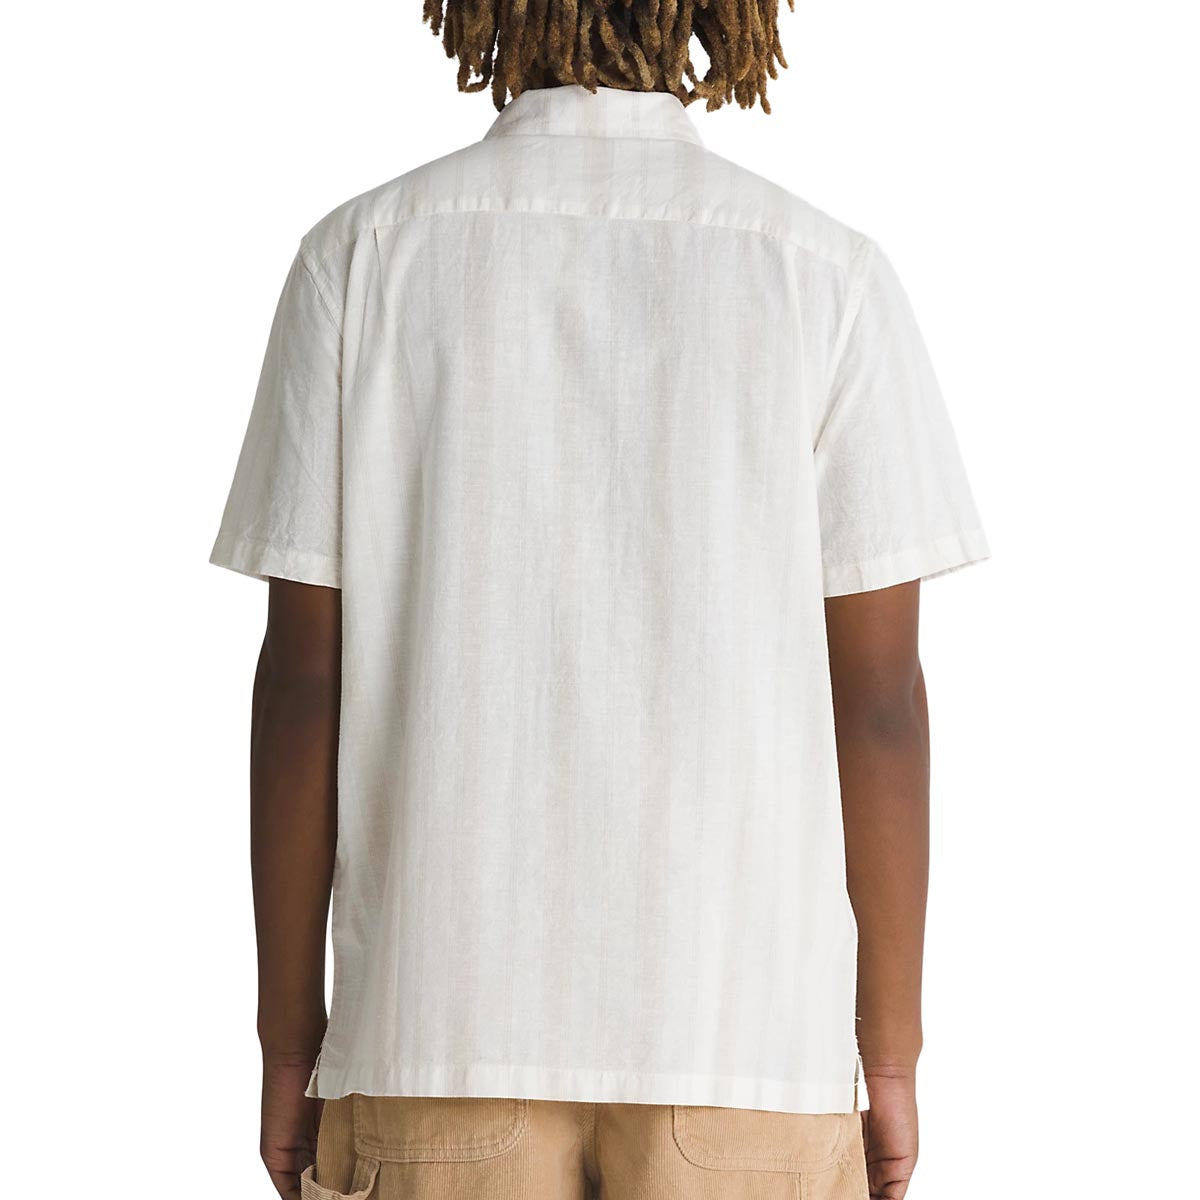 Vans Carnell Shirt - Marshmallow/Oatmeal image 2